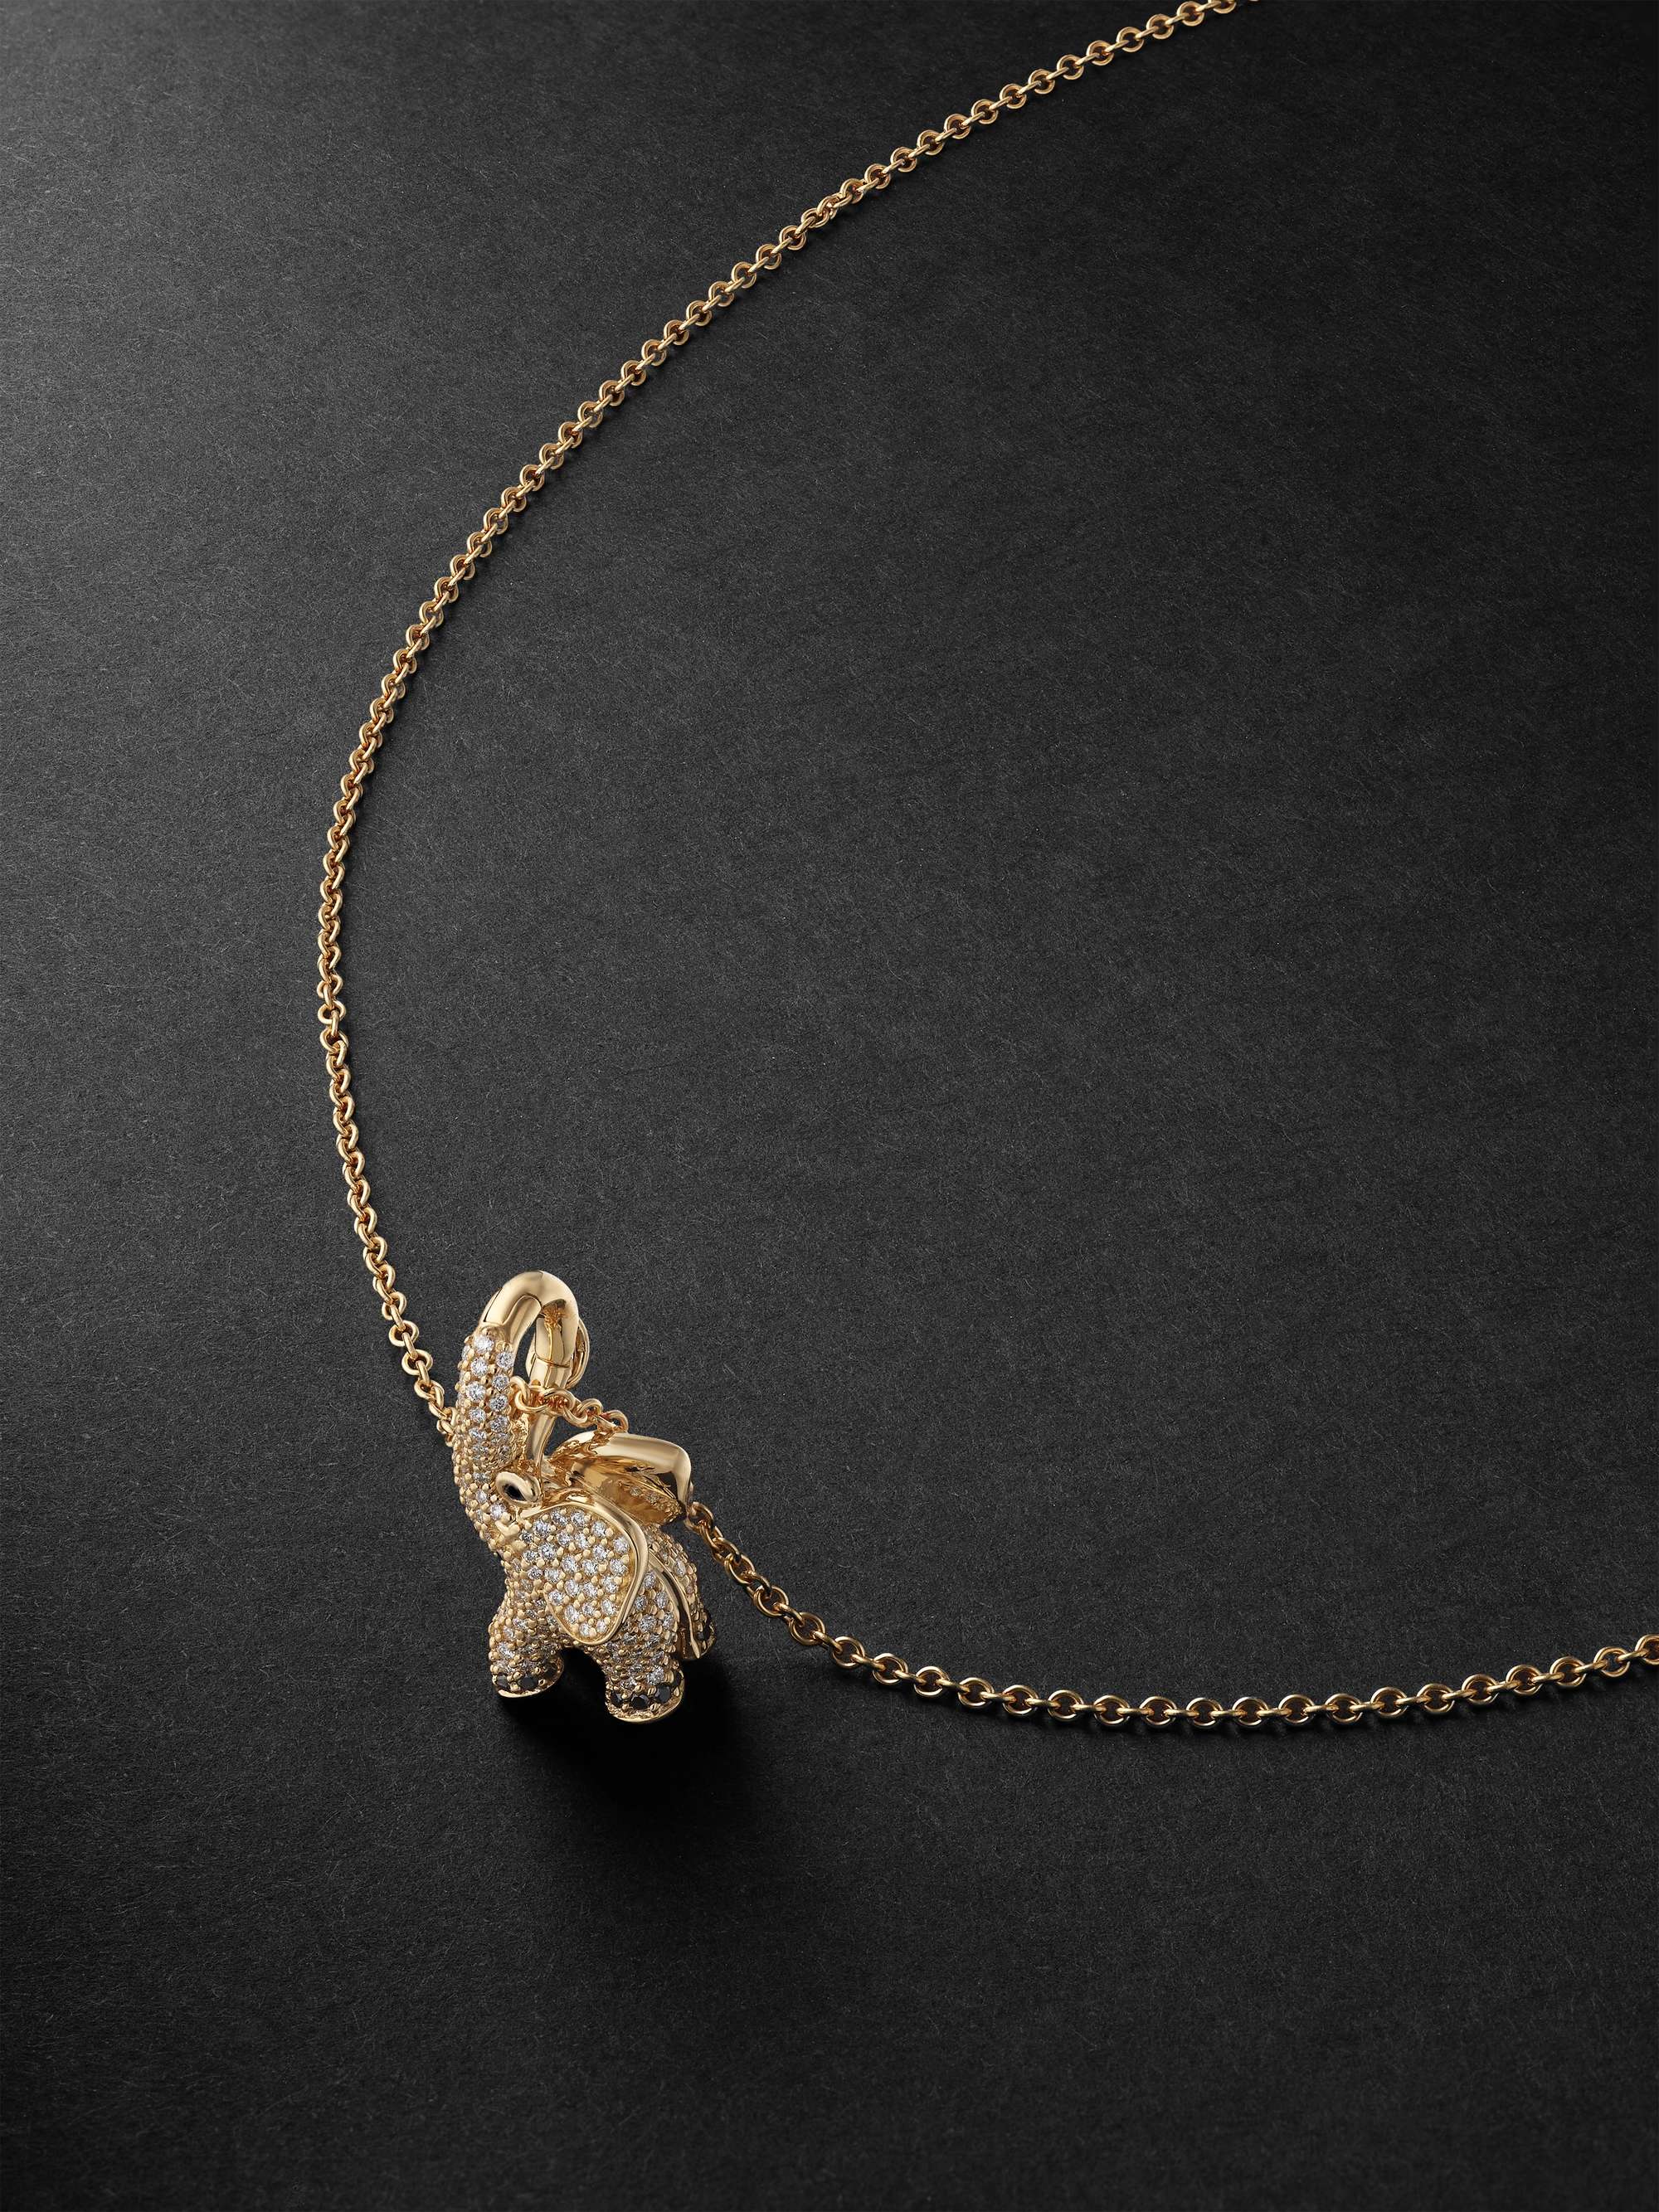 OLE LYNGGAARD COPENHAGEN Elephant Gold and Diamond Necklace